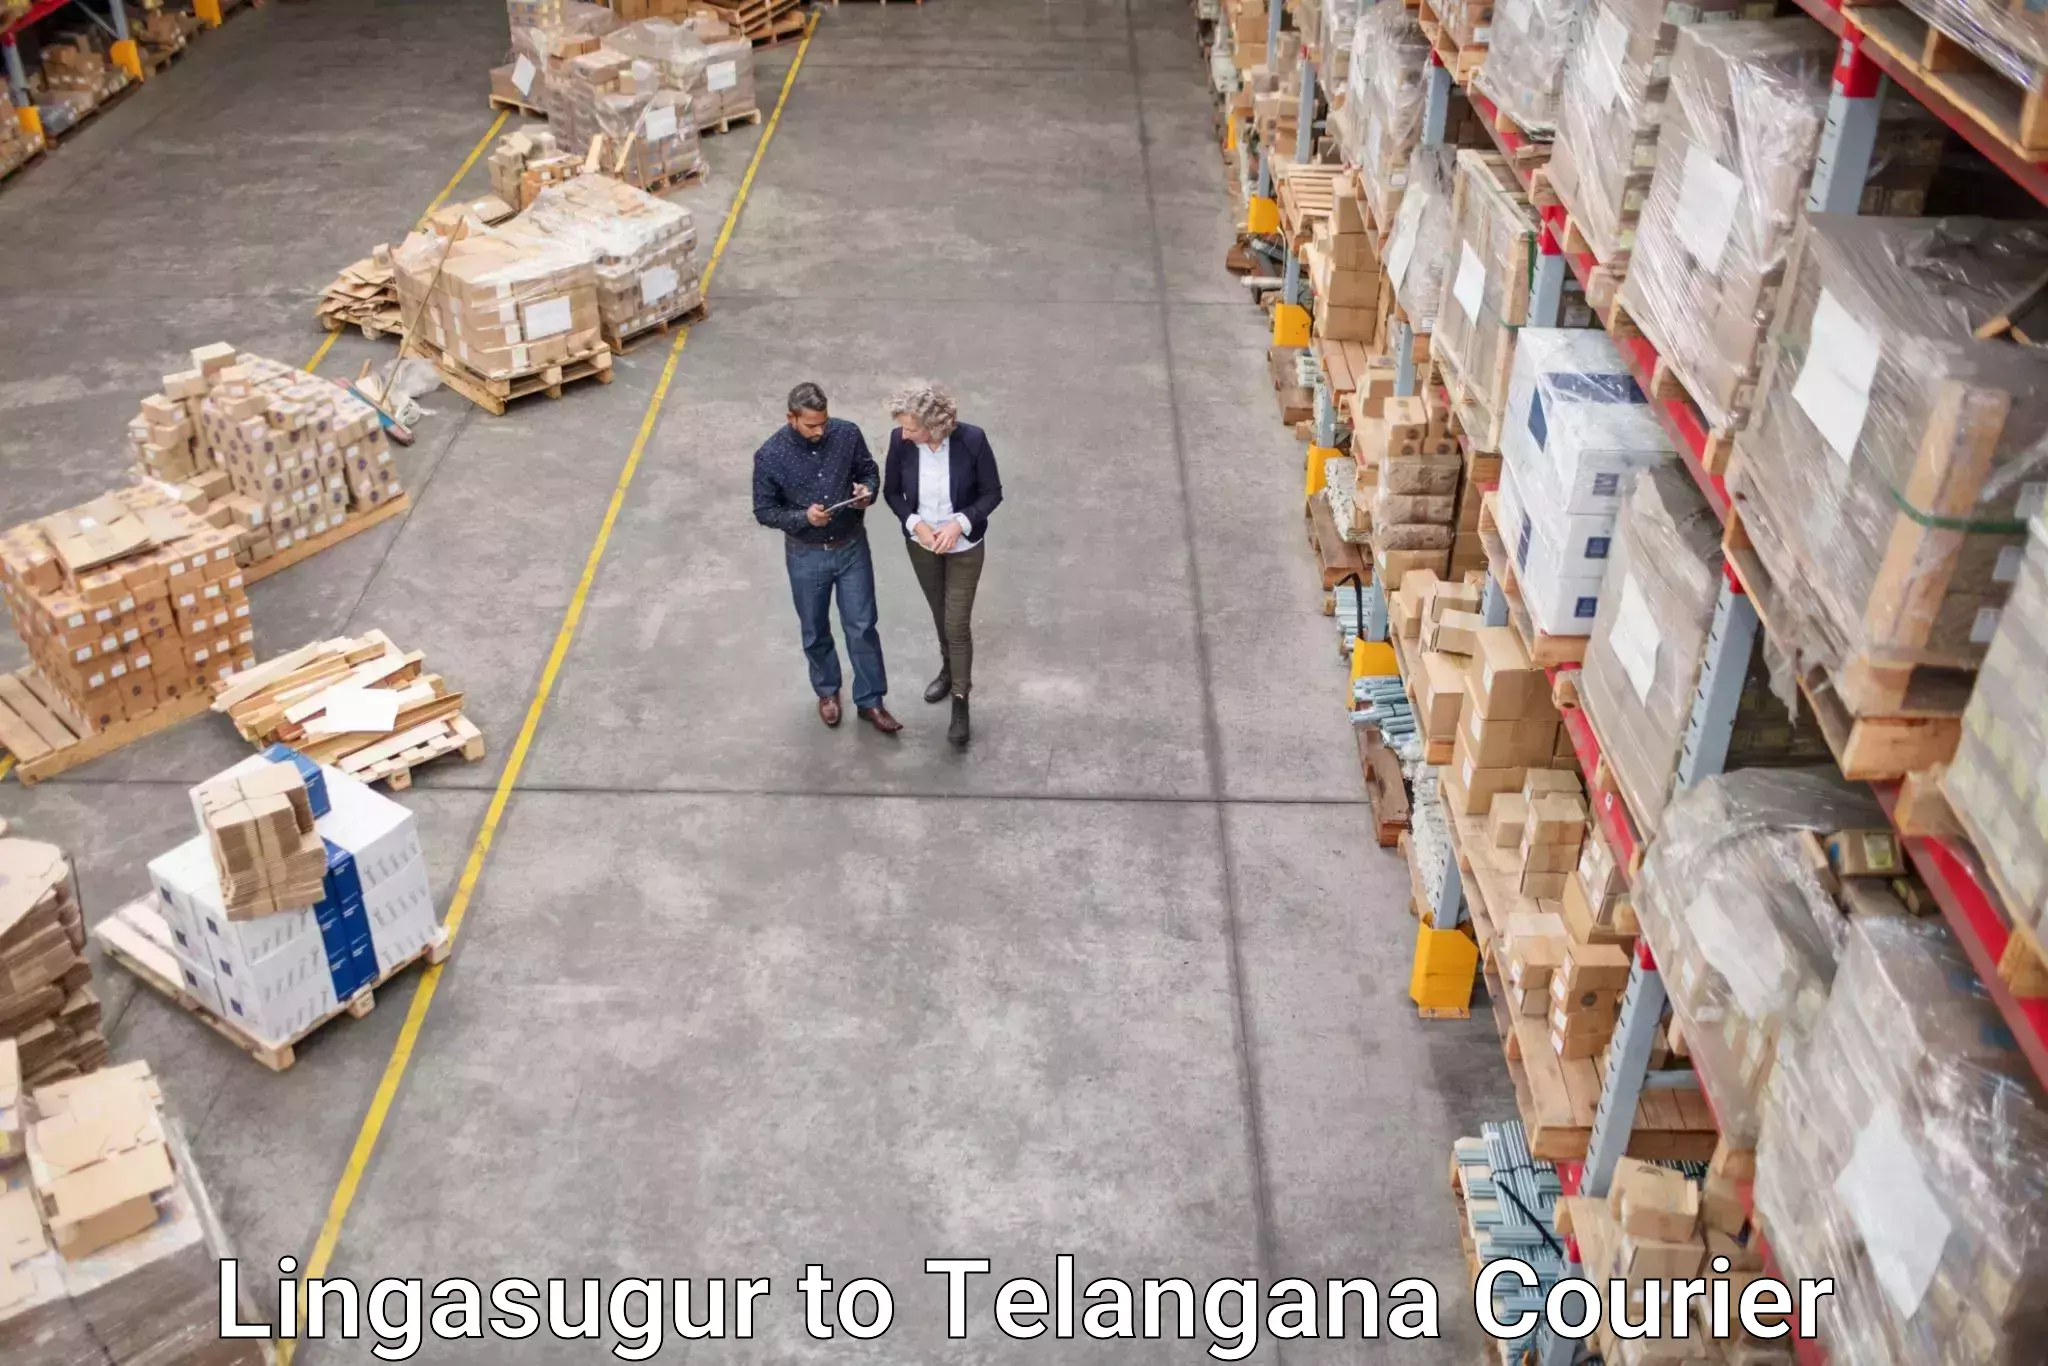 Express delivery capabilities Lingasugur to Gangadhara